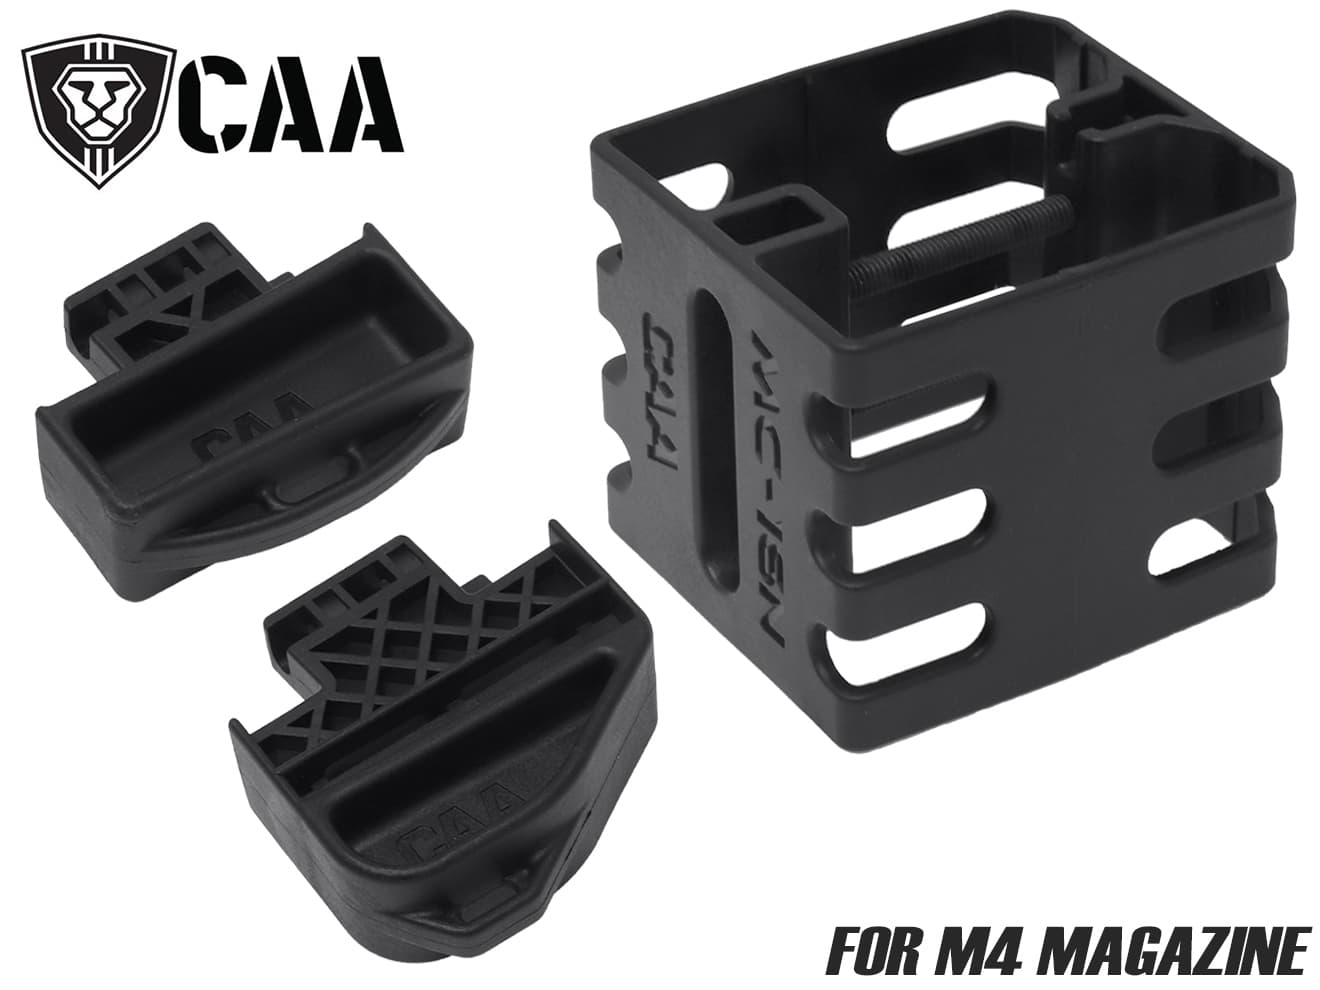 CAA AIRSOFT MC16N マガジンカプラー For M4スプリングマガジン